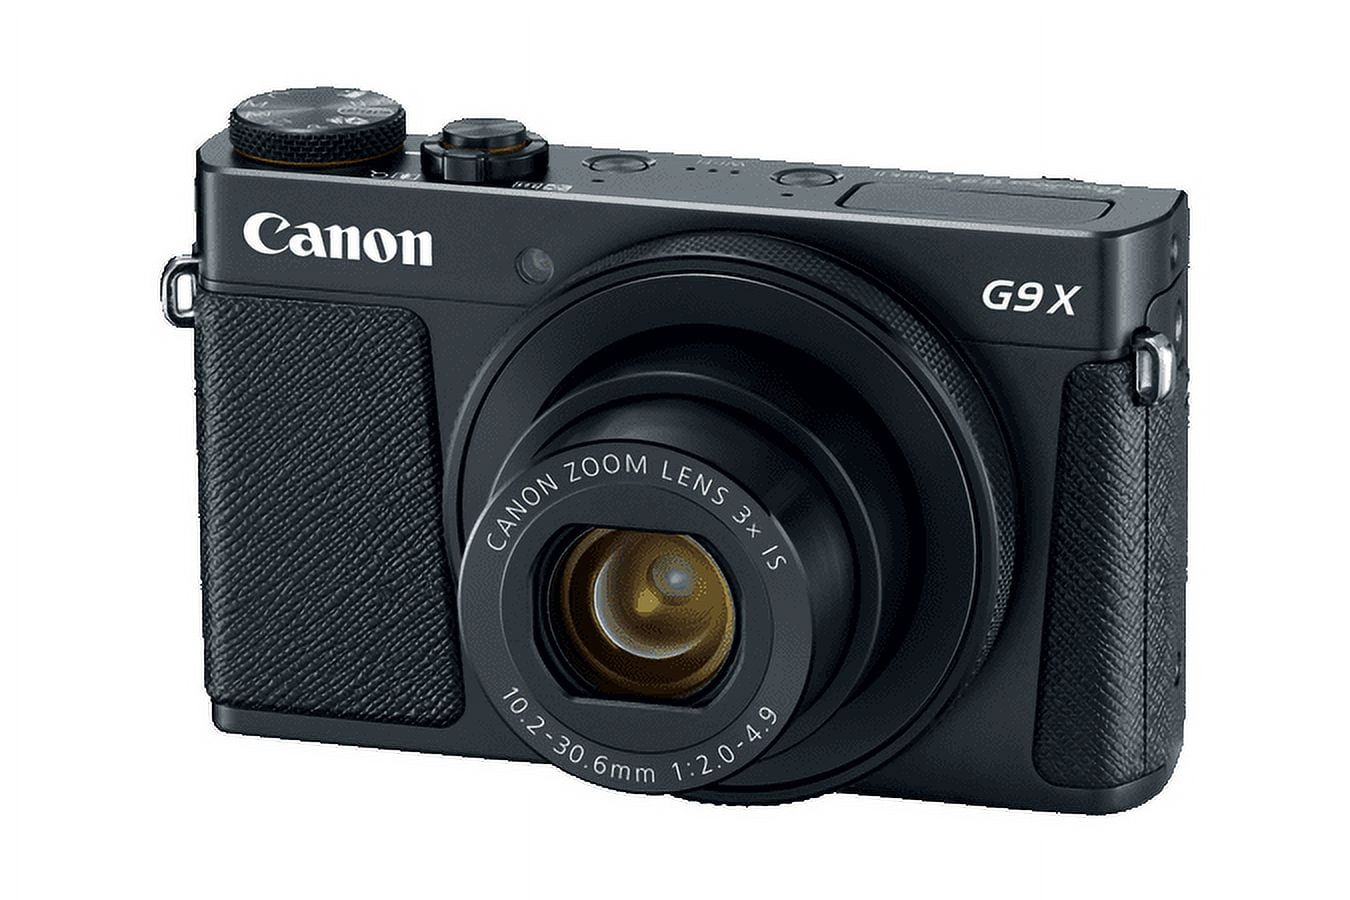 Canon PowerShot G9 X Mark II Digital Camera - Black - Walmart.com